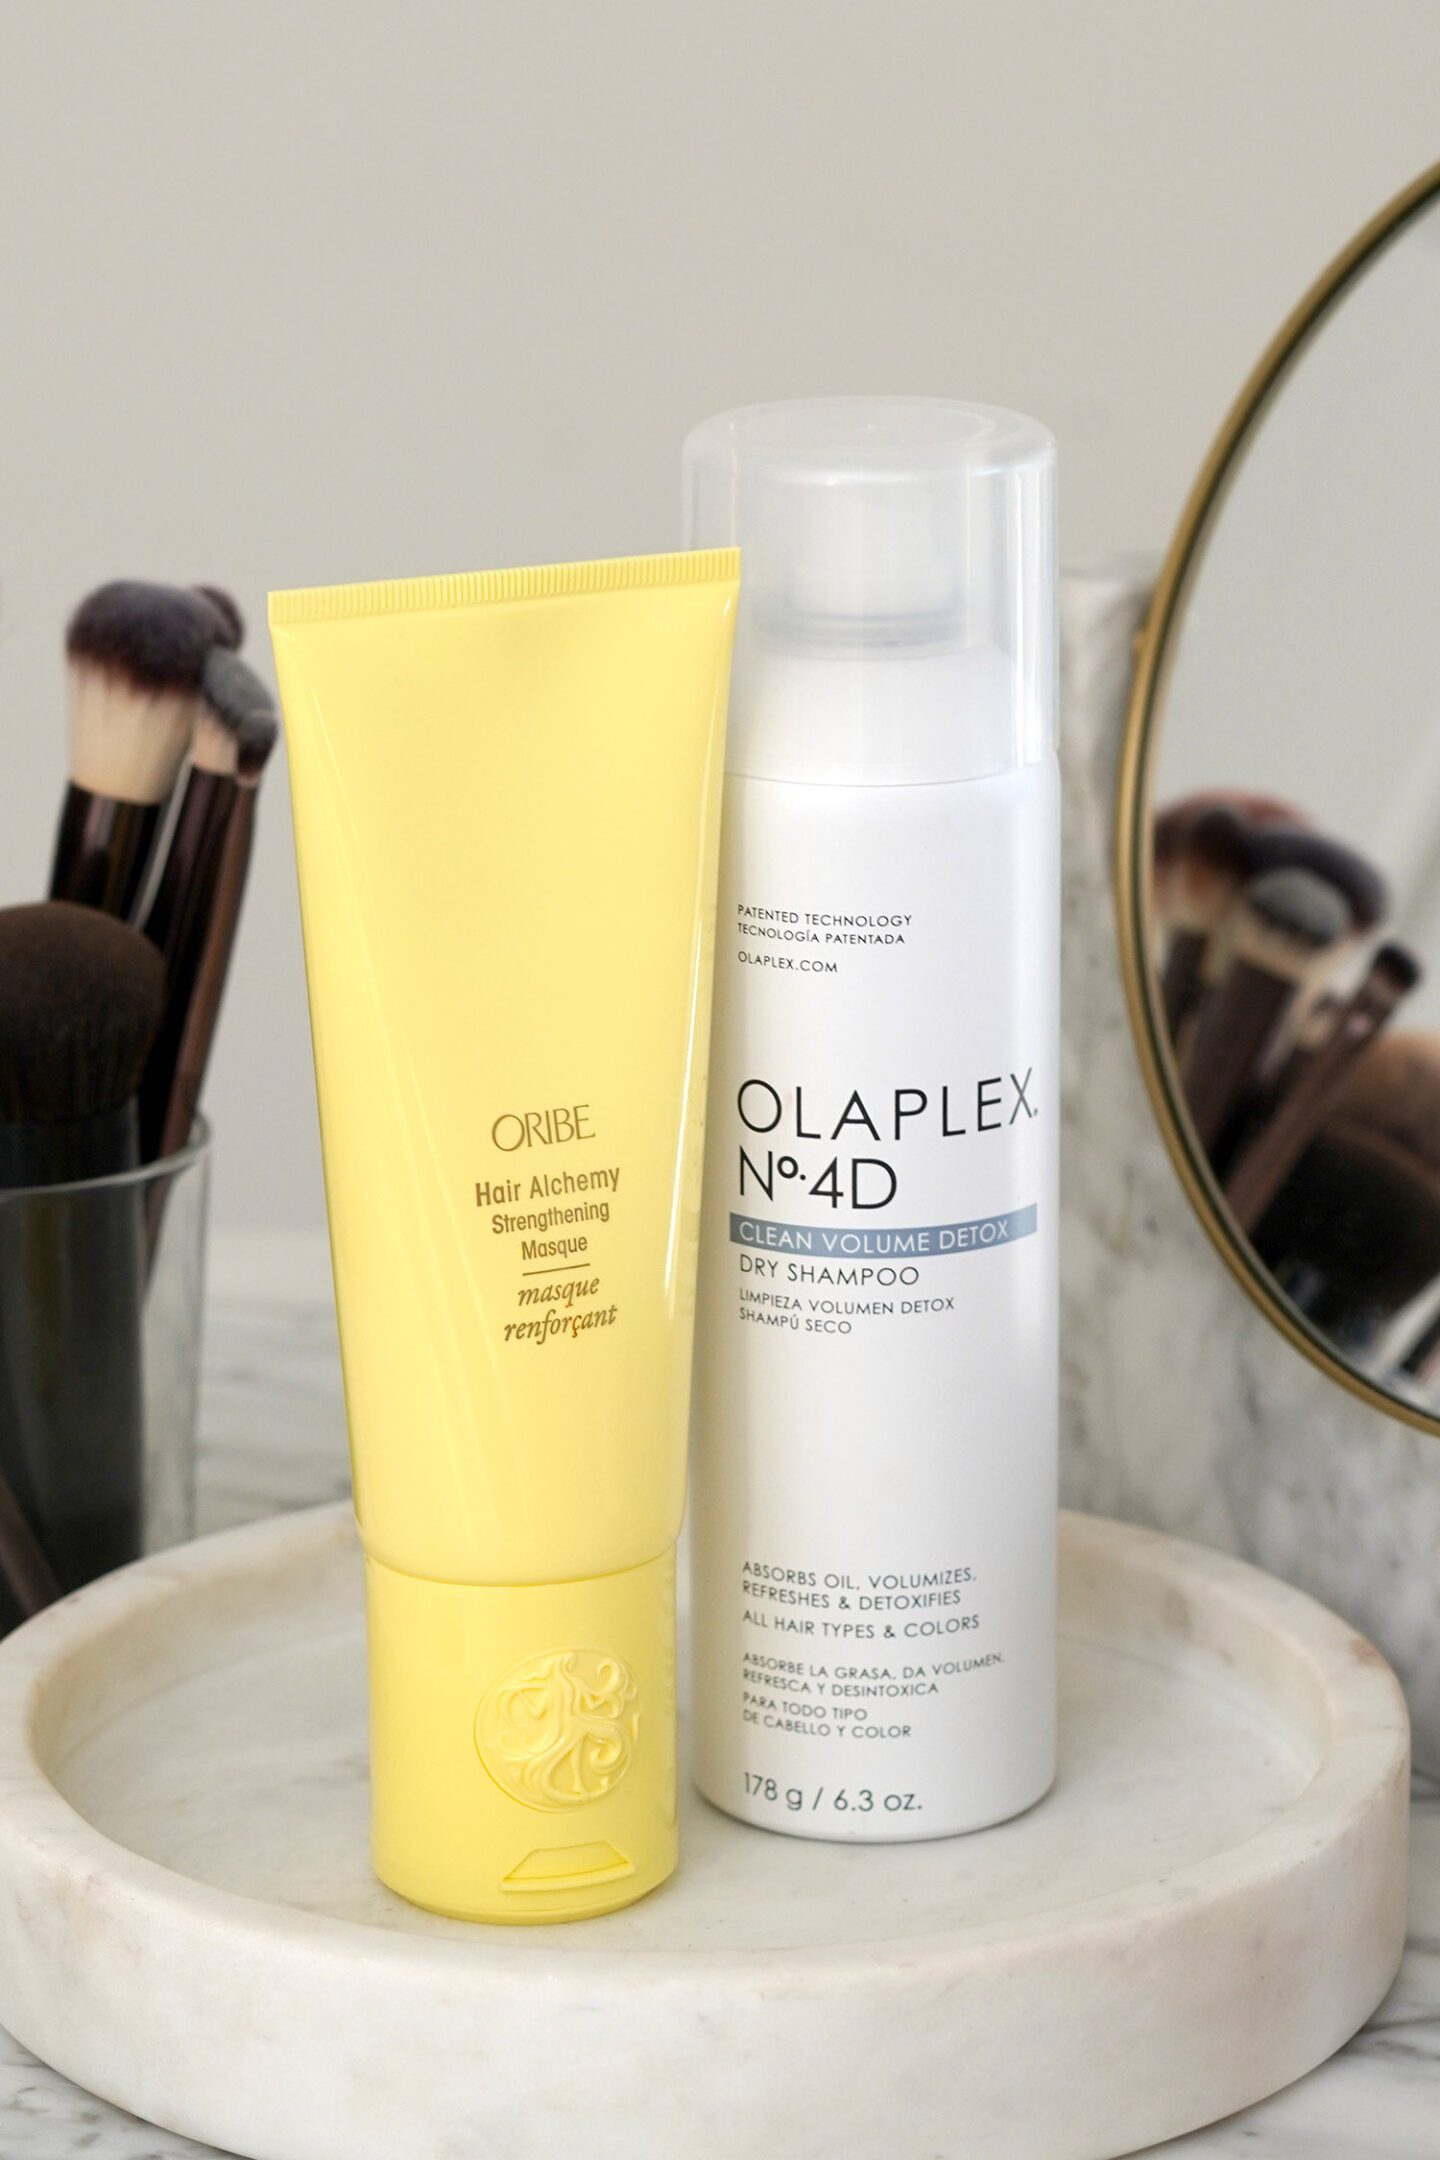 Oribe Hair Alchemy Strengthening Masque and Olaplex No.4D Clean Volume Detox Dry Shampoo 